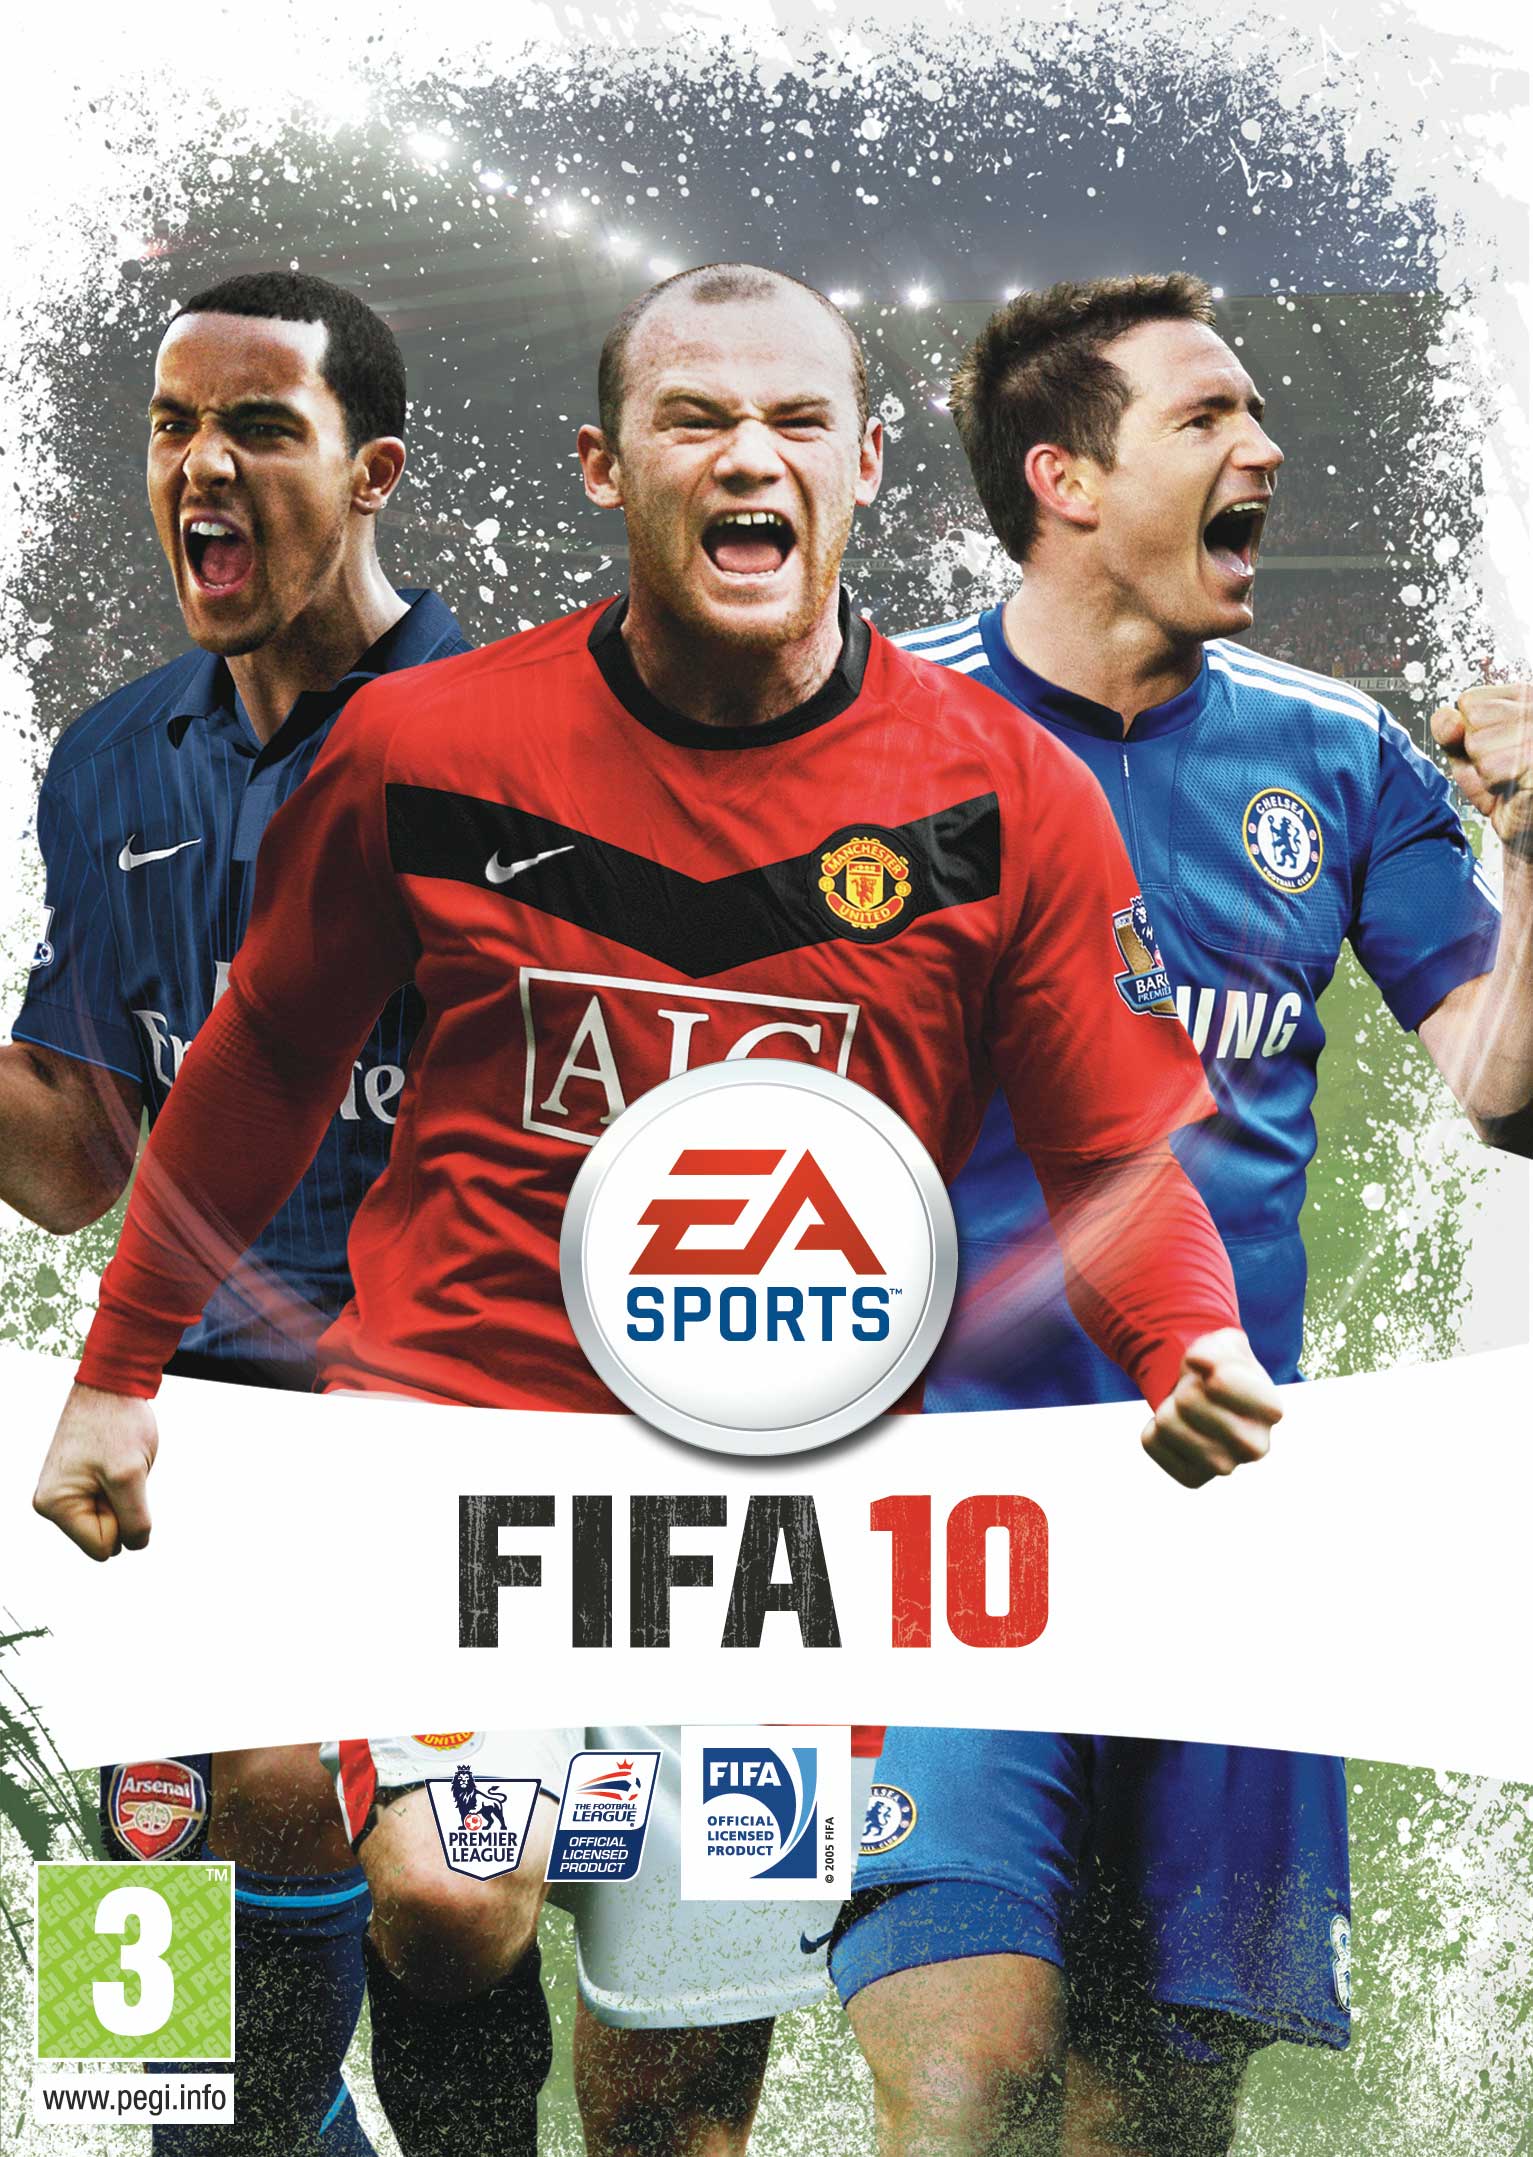  FIFA Soccer 11 - Playstation 3 : Video Games